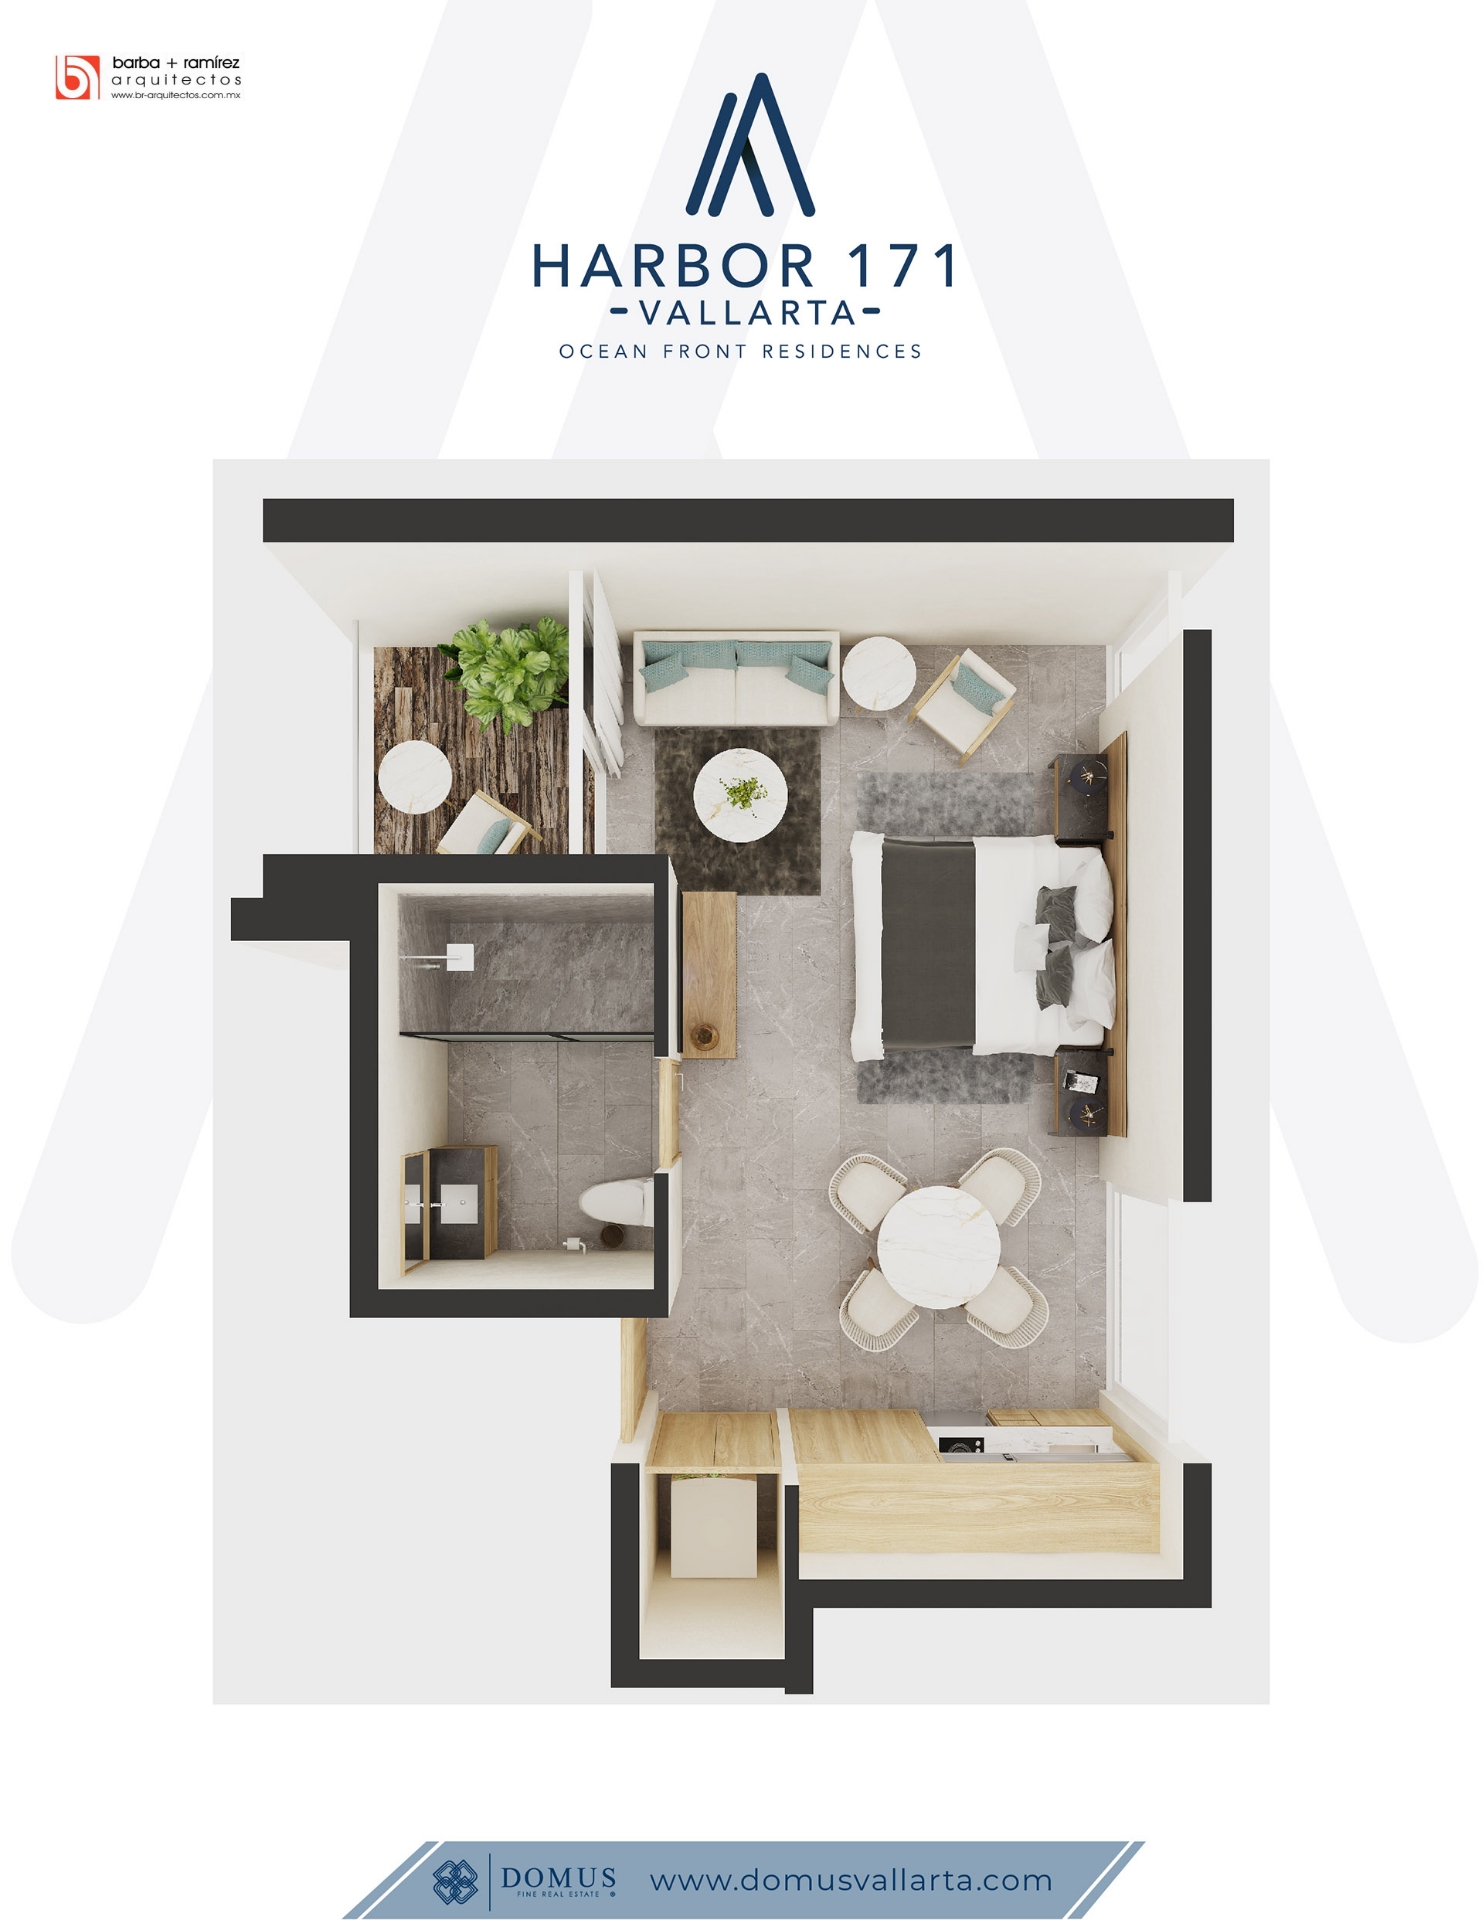 Unit 2110 Blueprint - Harbor 171